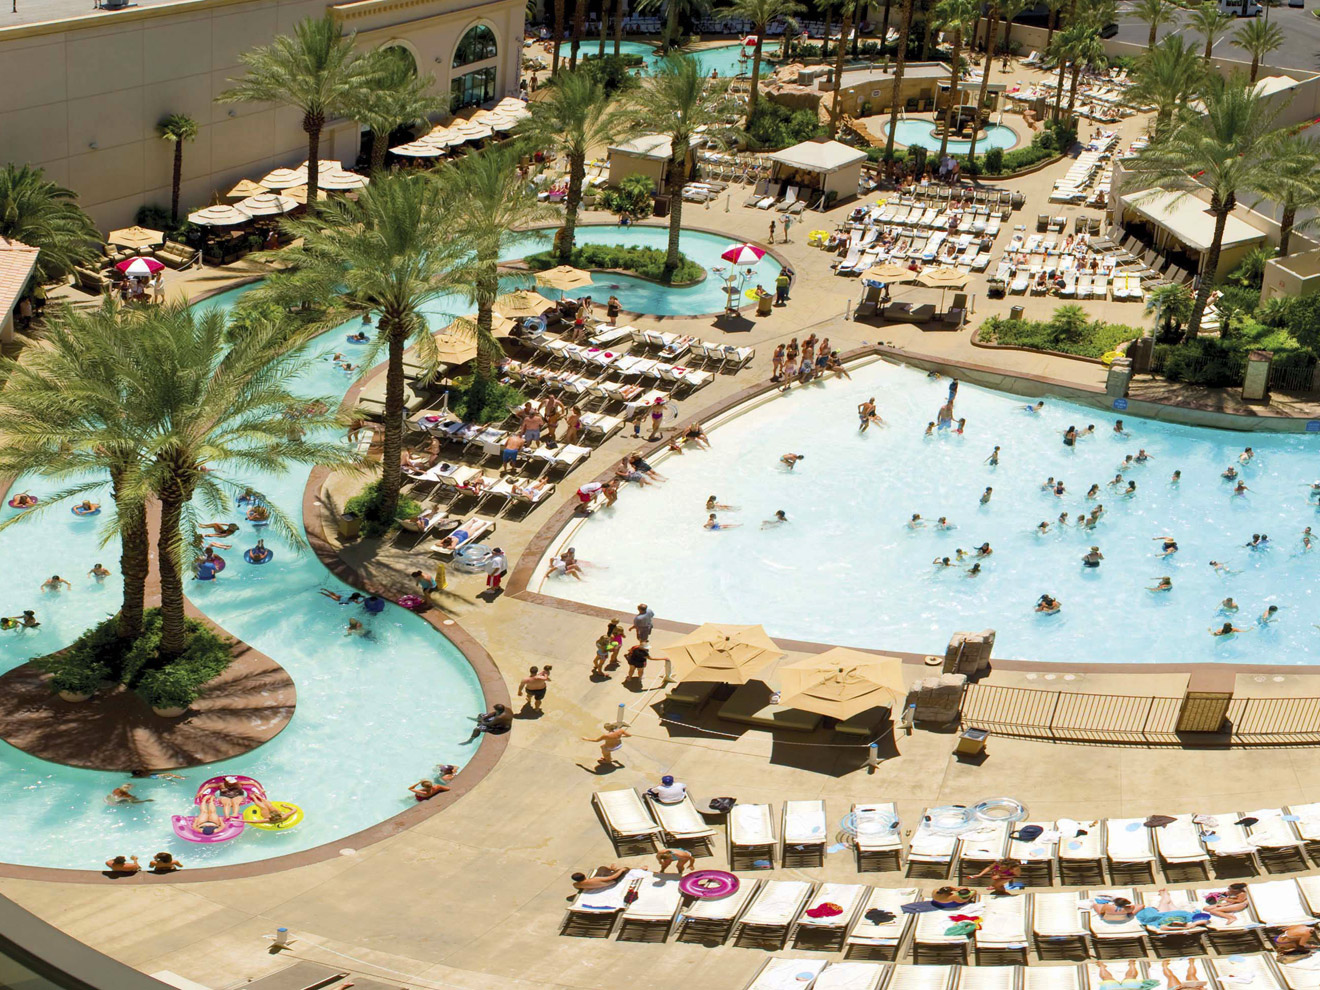 Best Pools in Las Vegas, Lazy River and Wave Pools - Top Pools [2019]